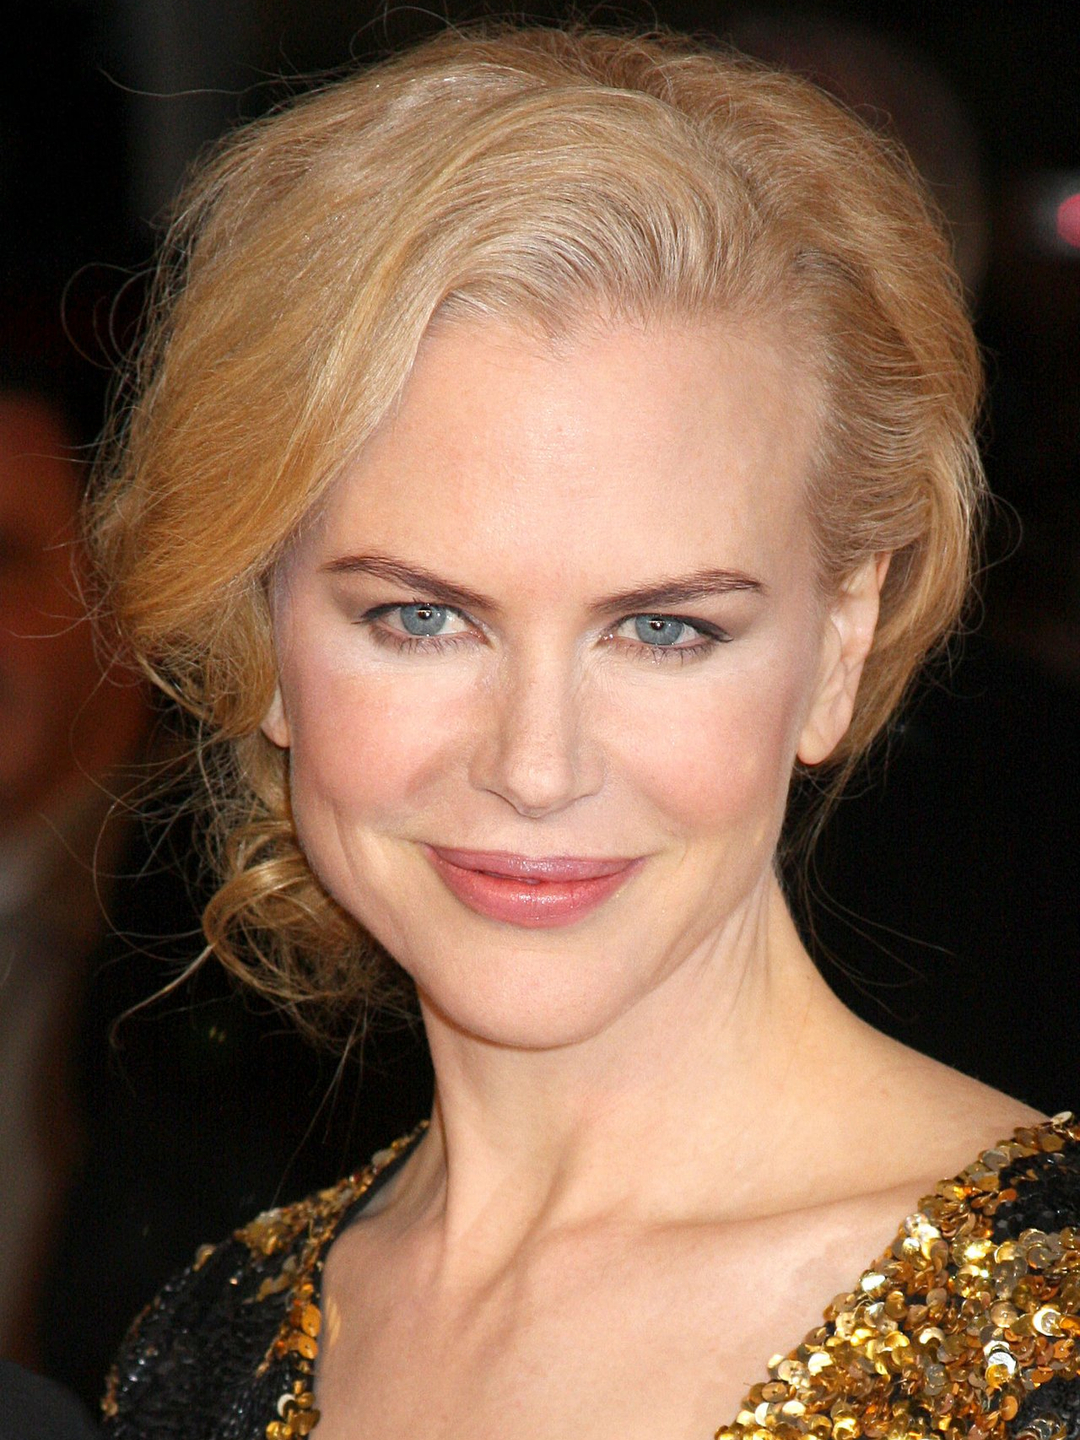 Nicole Kidman early career